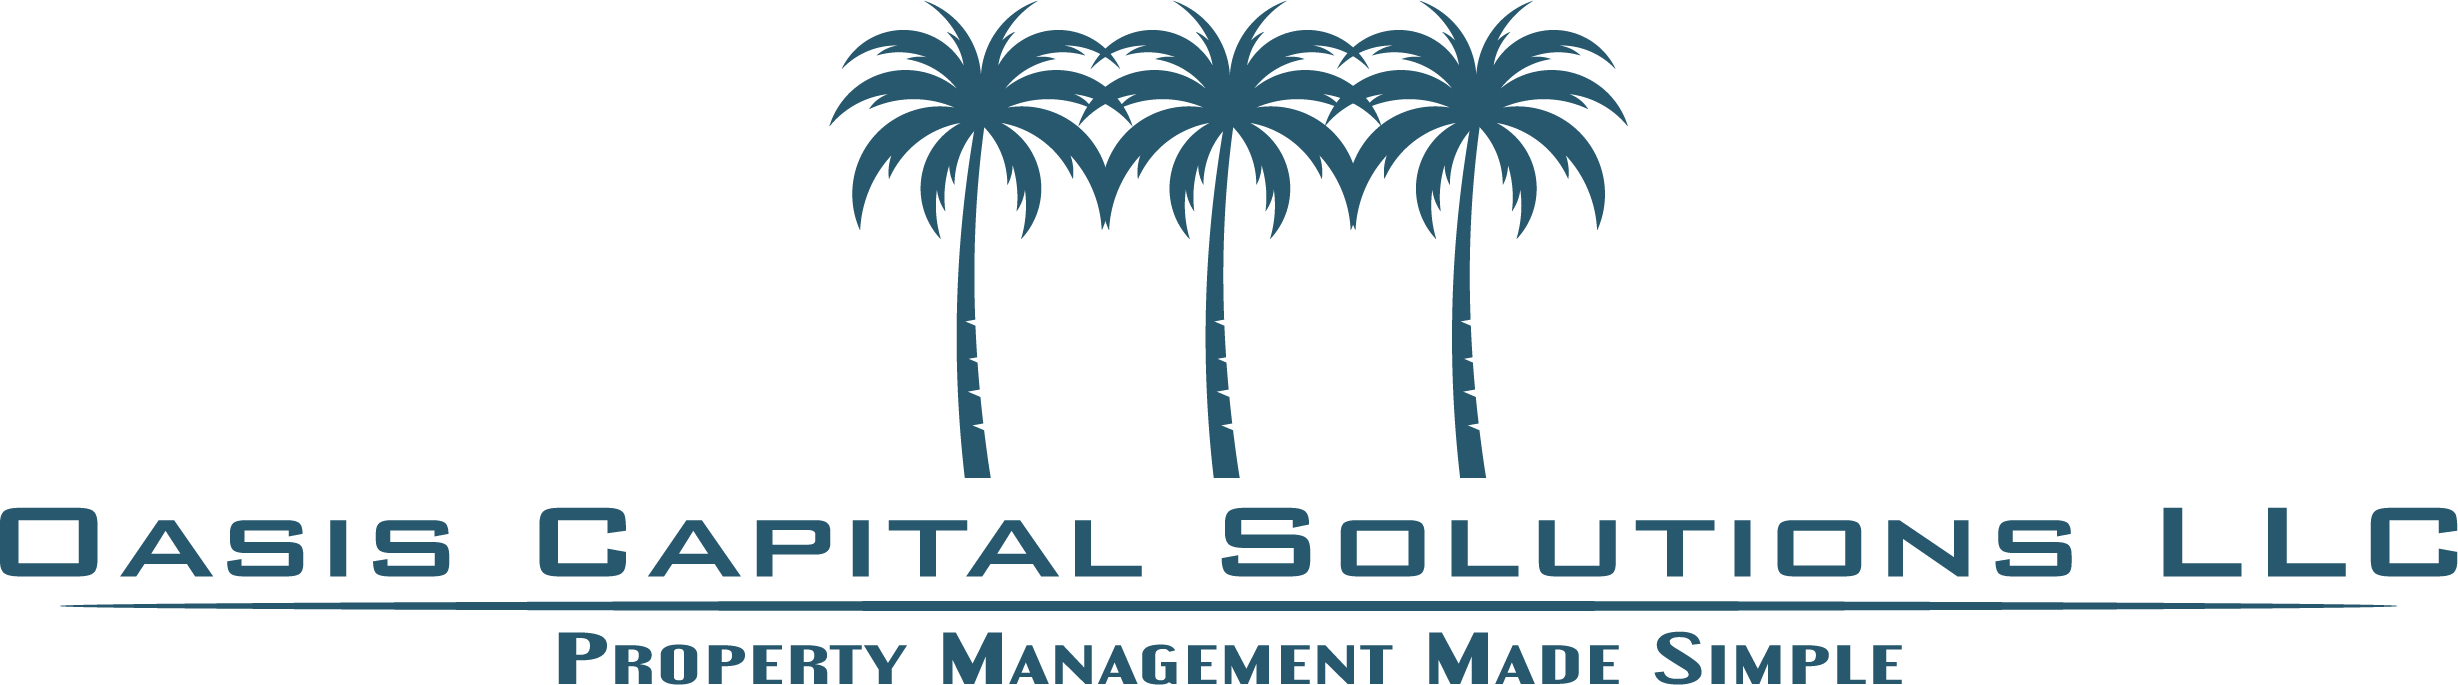 Oasis Capital Solutions LLC